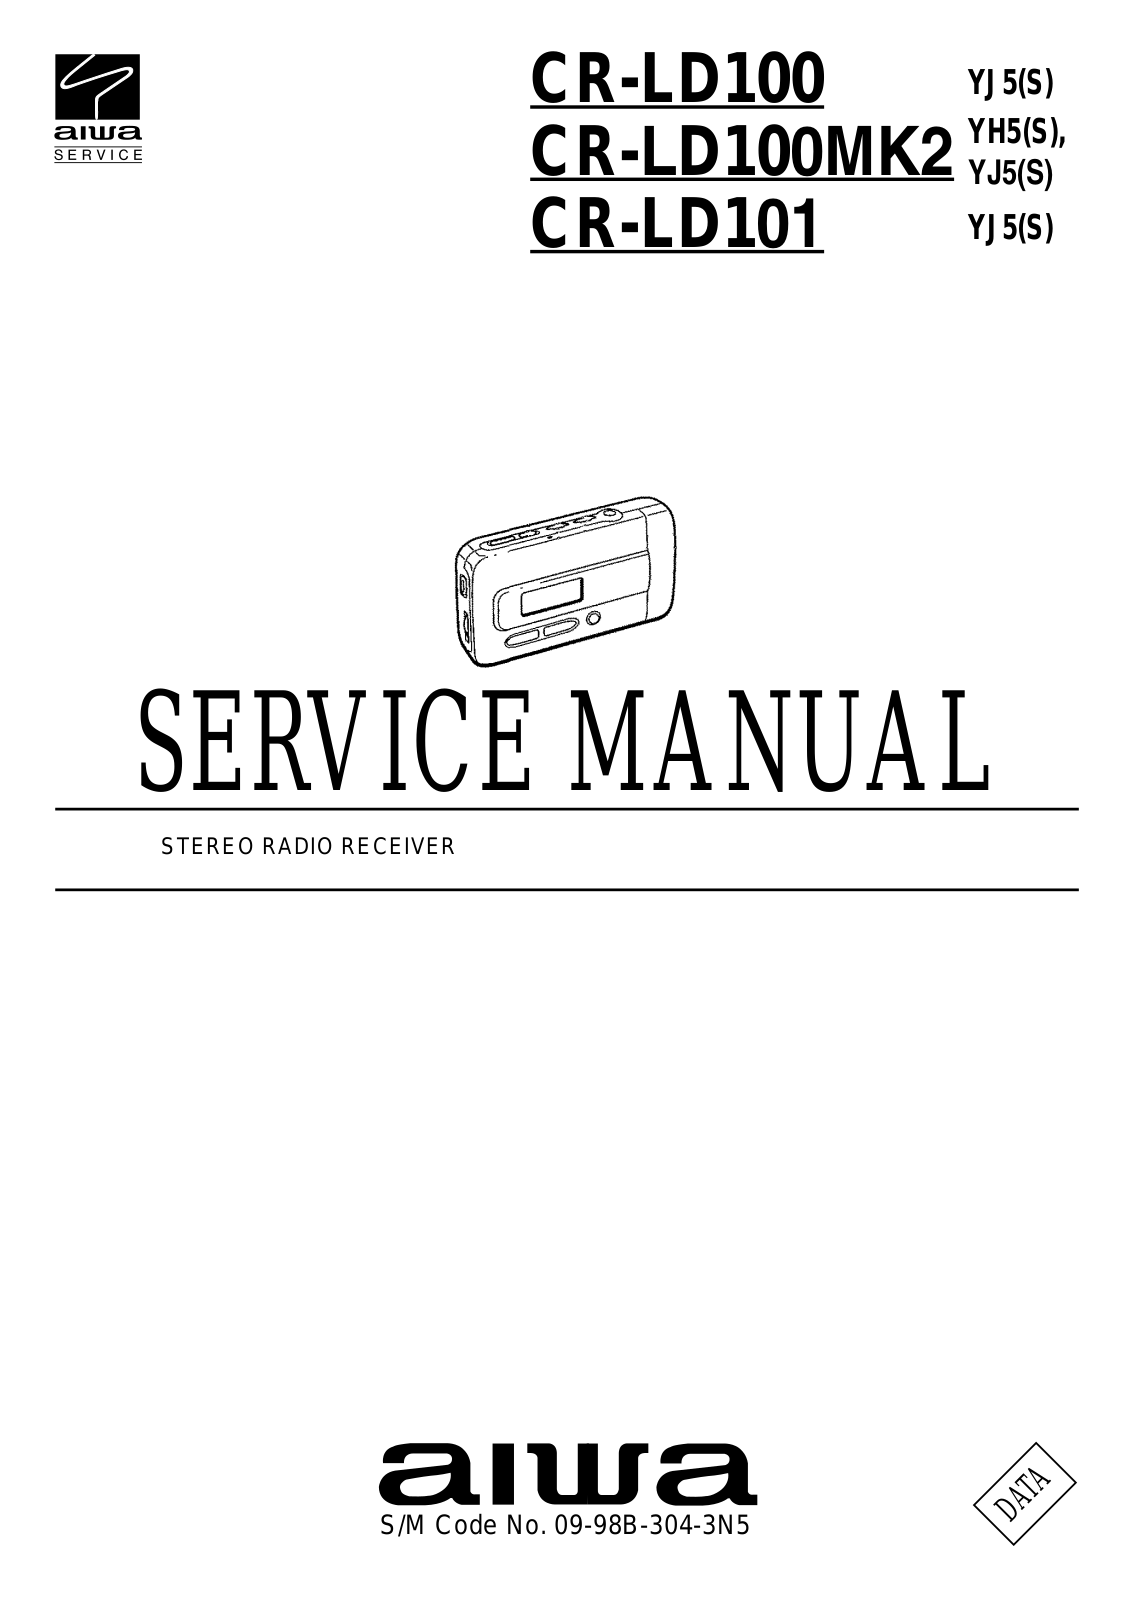 Aiwa CR-LD100, CR-LD100MK2, CR-LD101 Service Manual